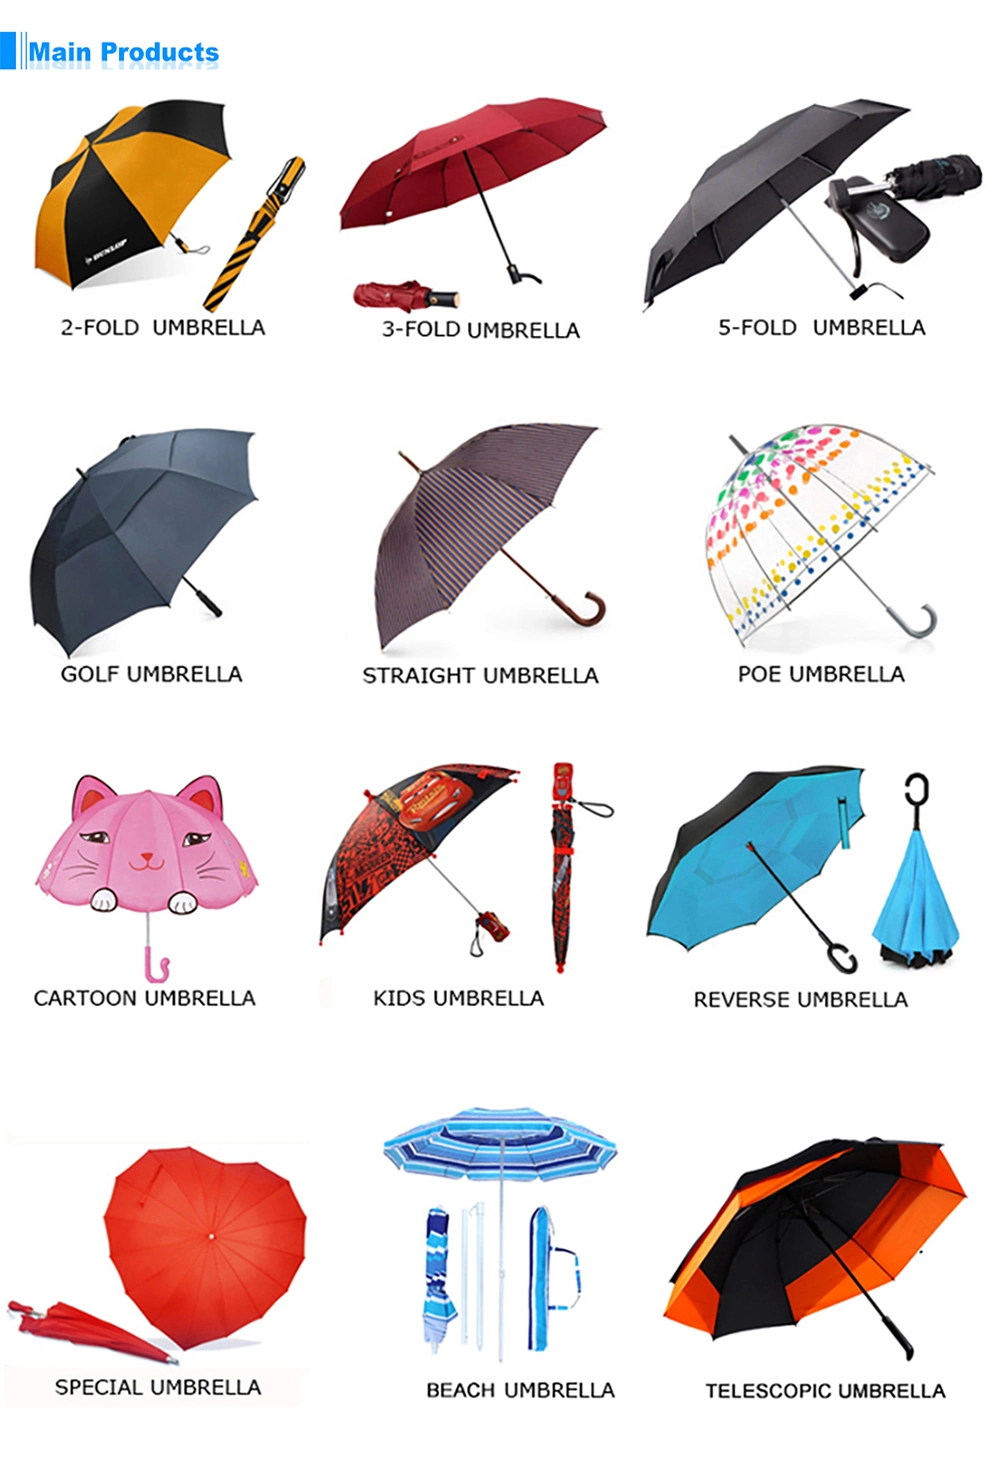 Large Golf Umbrella Double Canopy Vented Square Umbrella Windproof